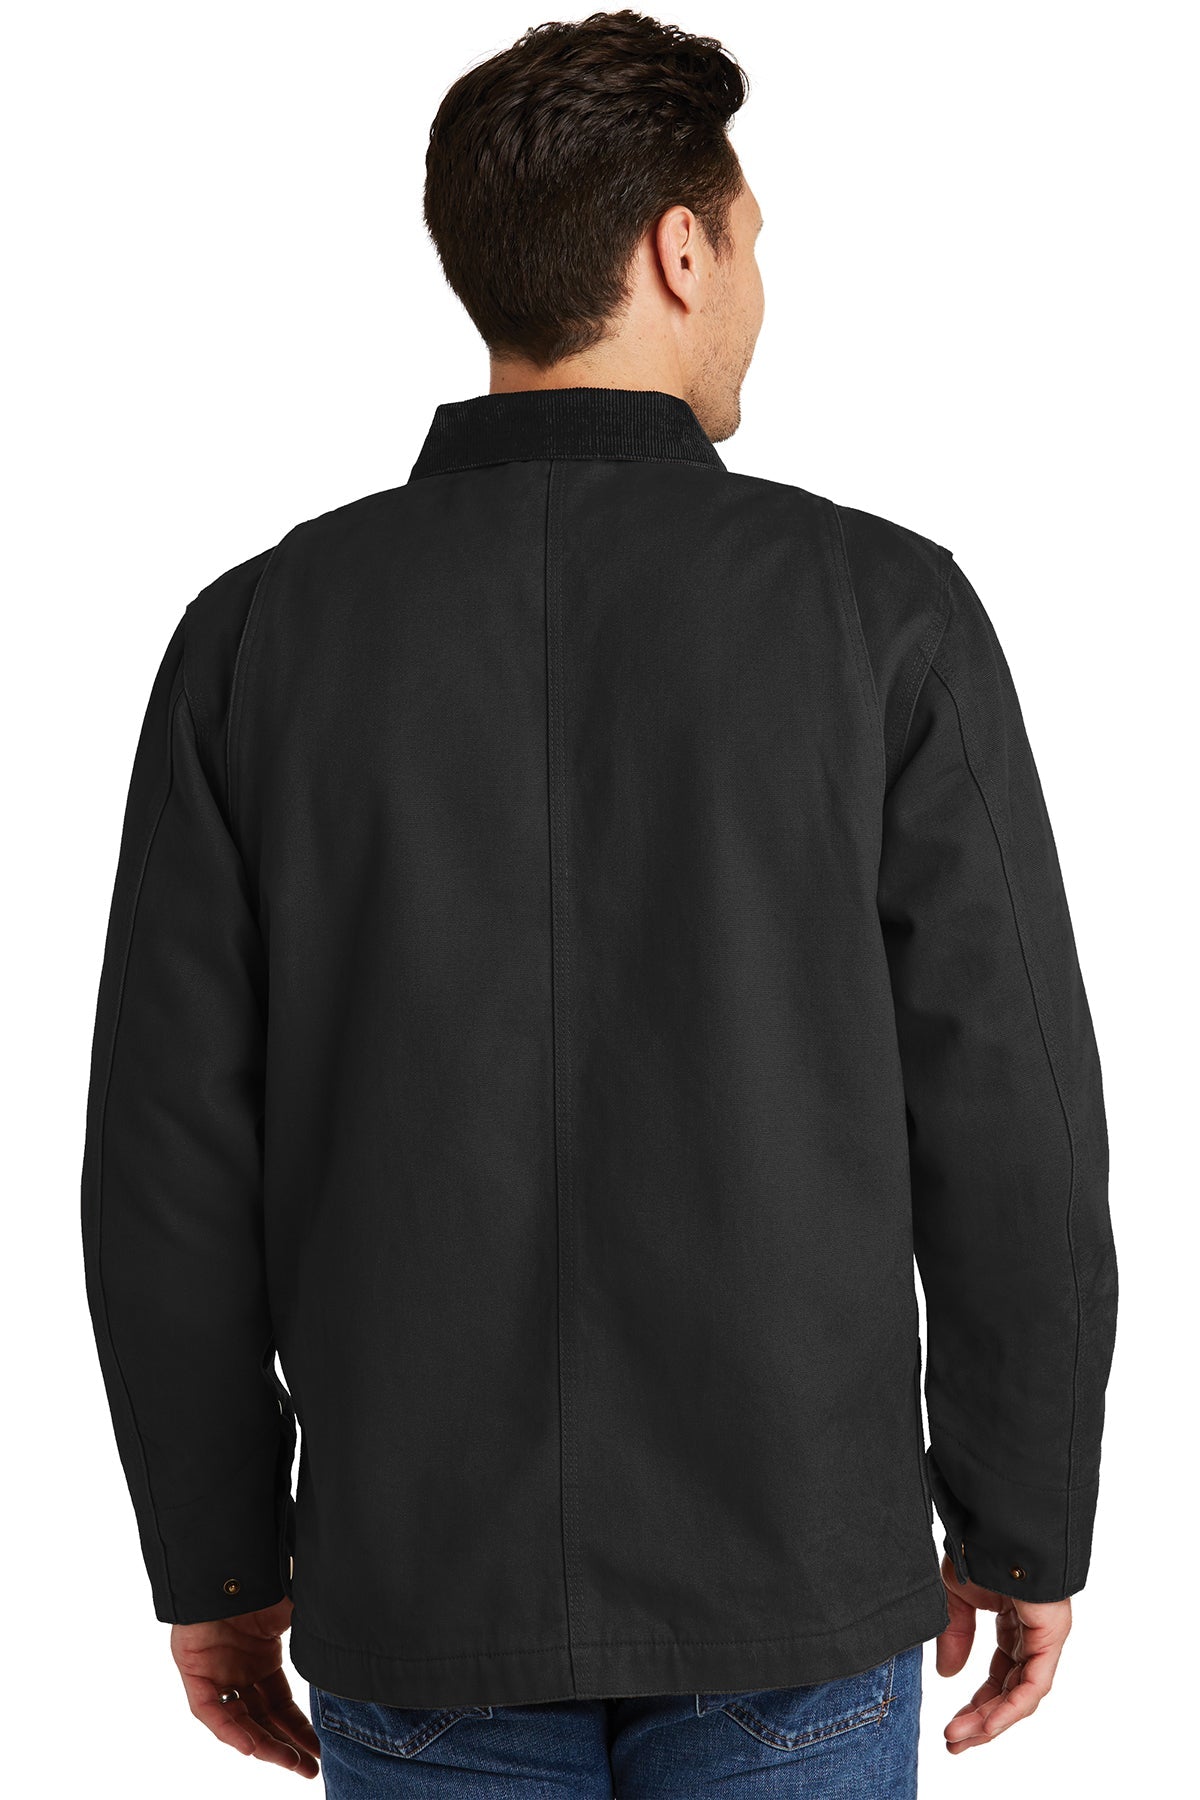 cornerstone_csj50 _black_company_logo_jackets